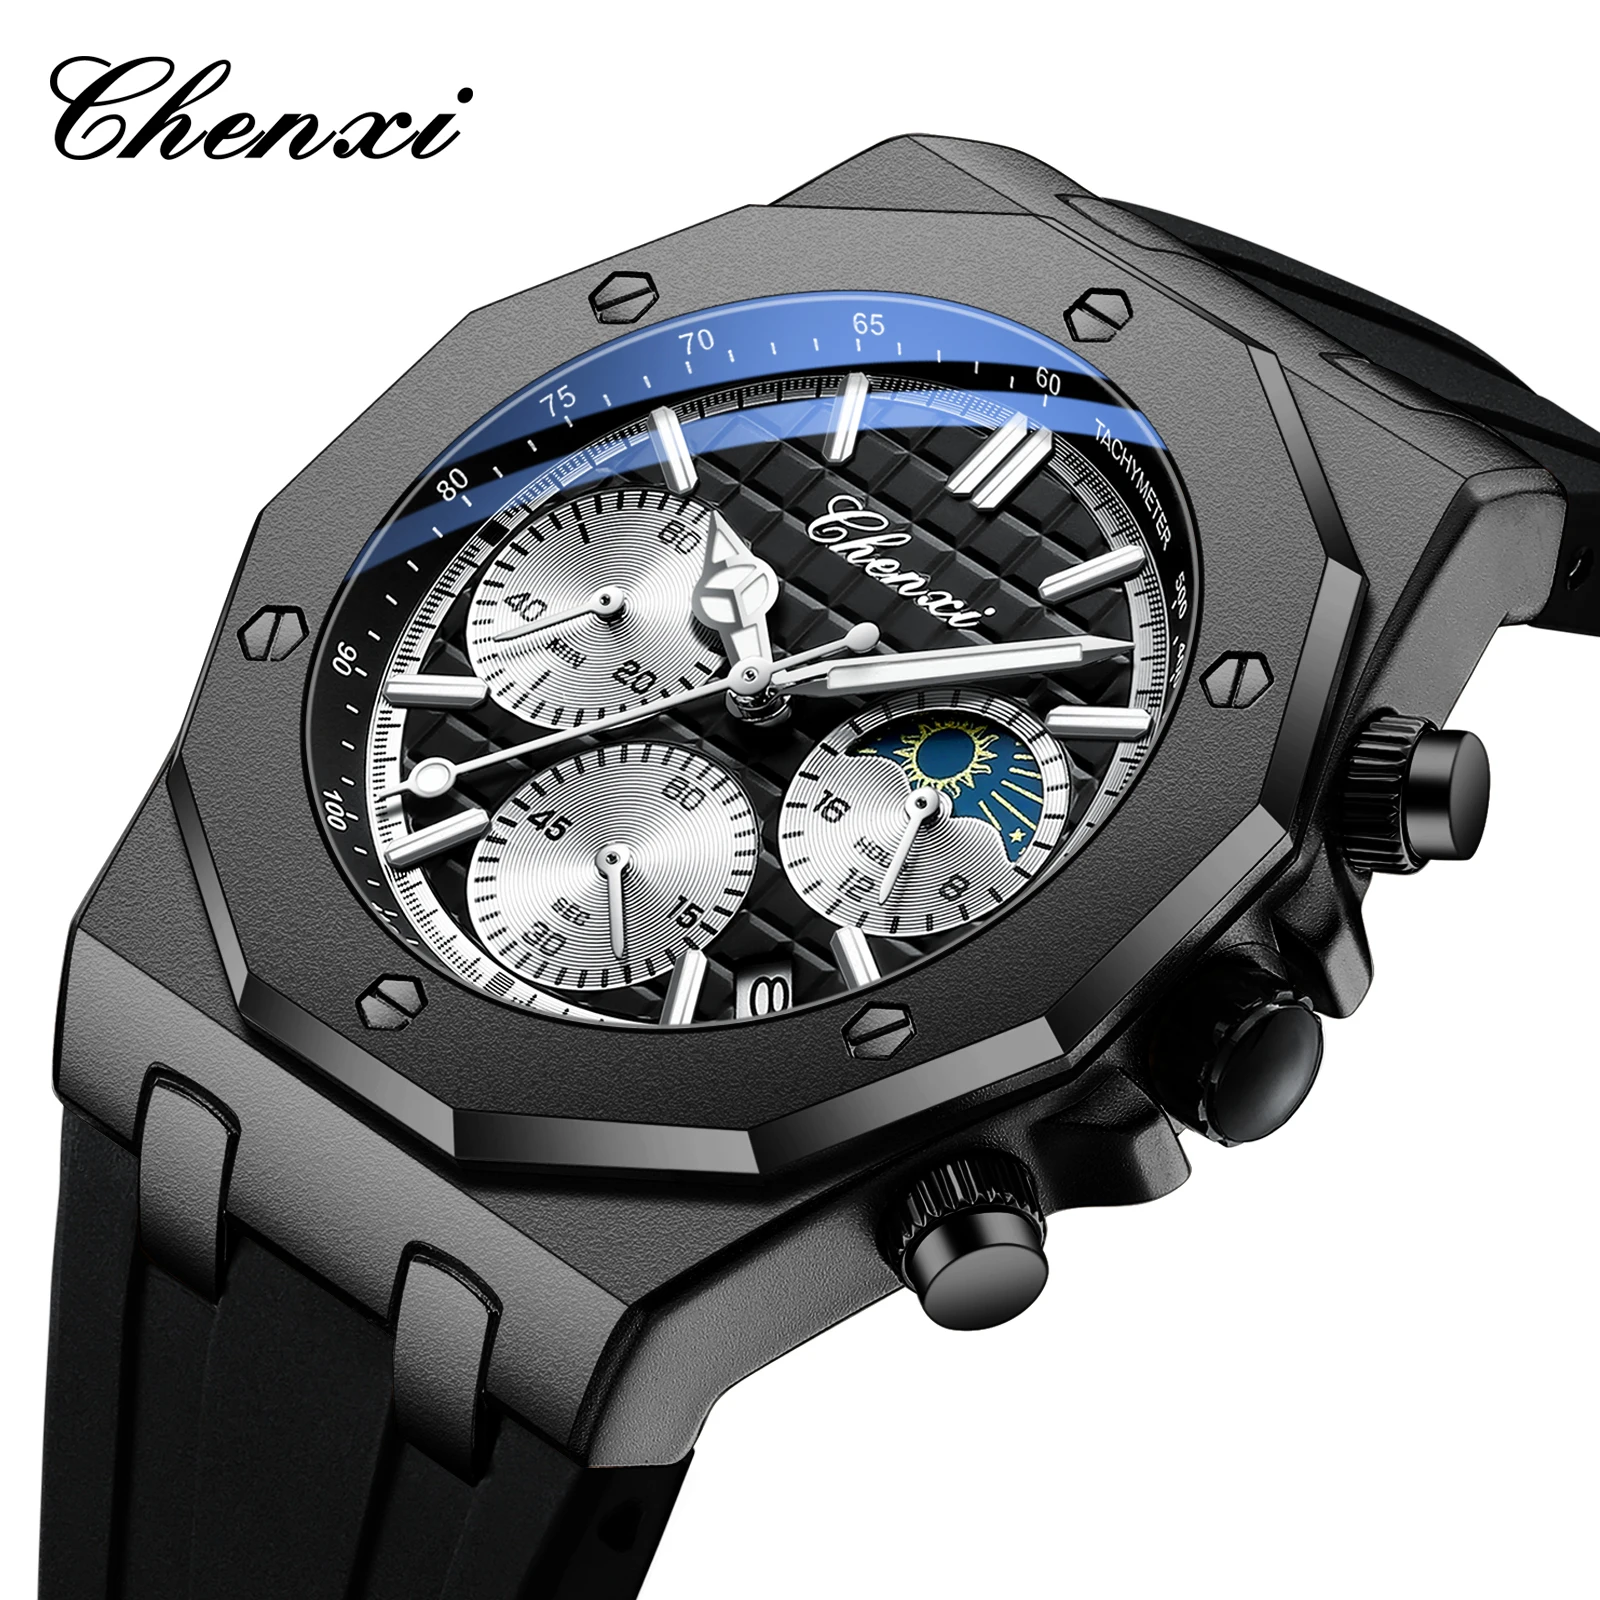 

CHENXI Top Brand Luxury Watch For Men Fashion Luminous Hands Moon Phase Chronograph Quartz Clock Casual Male Date Wristwatches